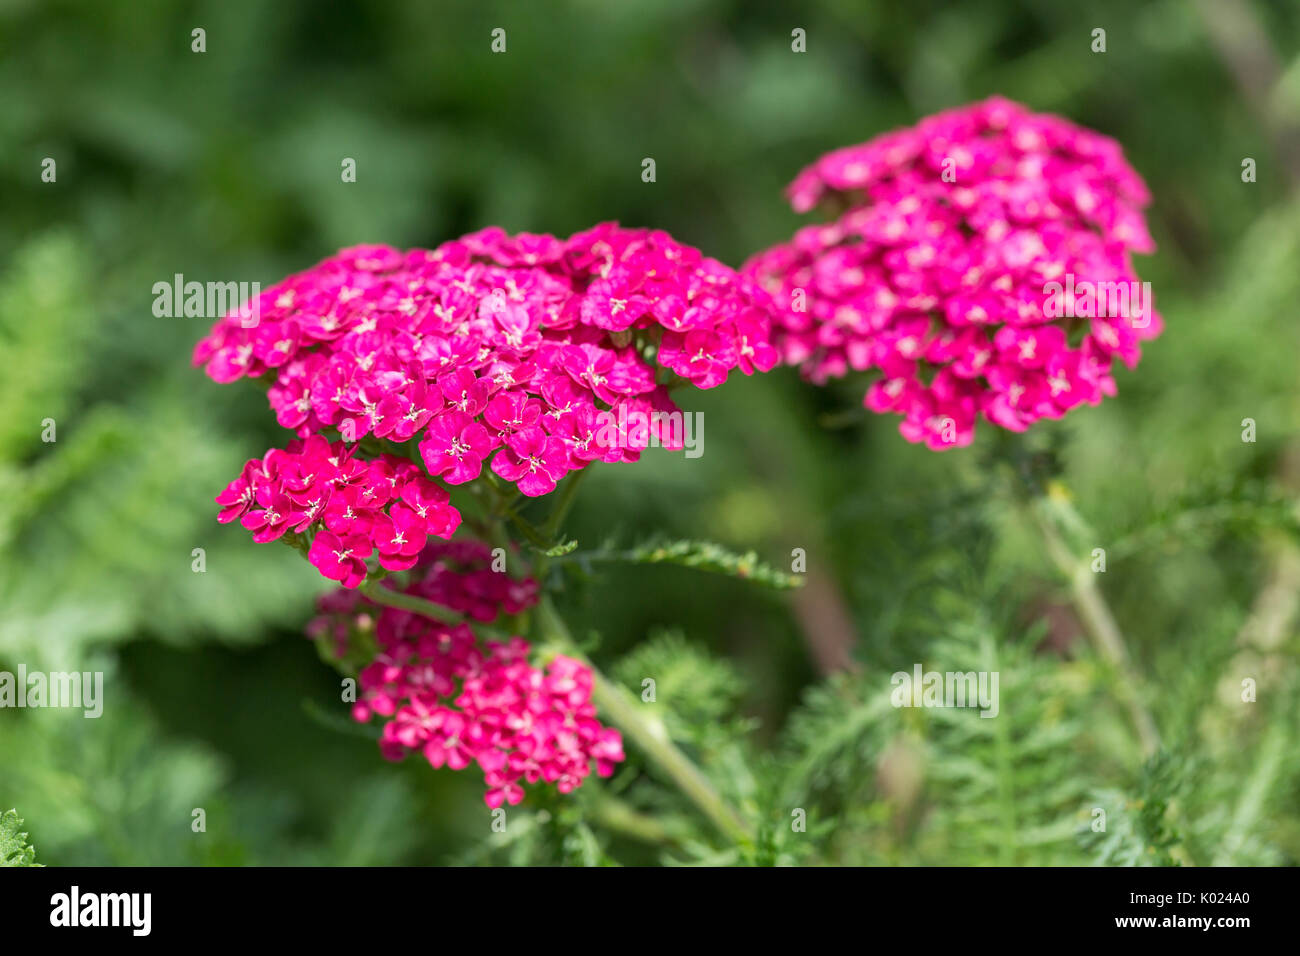 Pink Yarrow Flowers growing in the garden Stock Photo